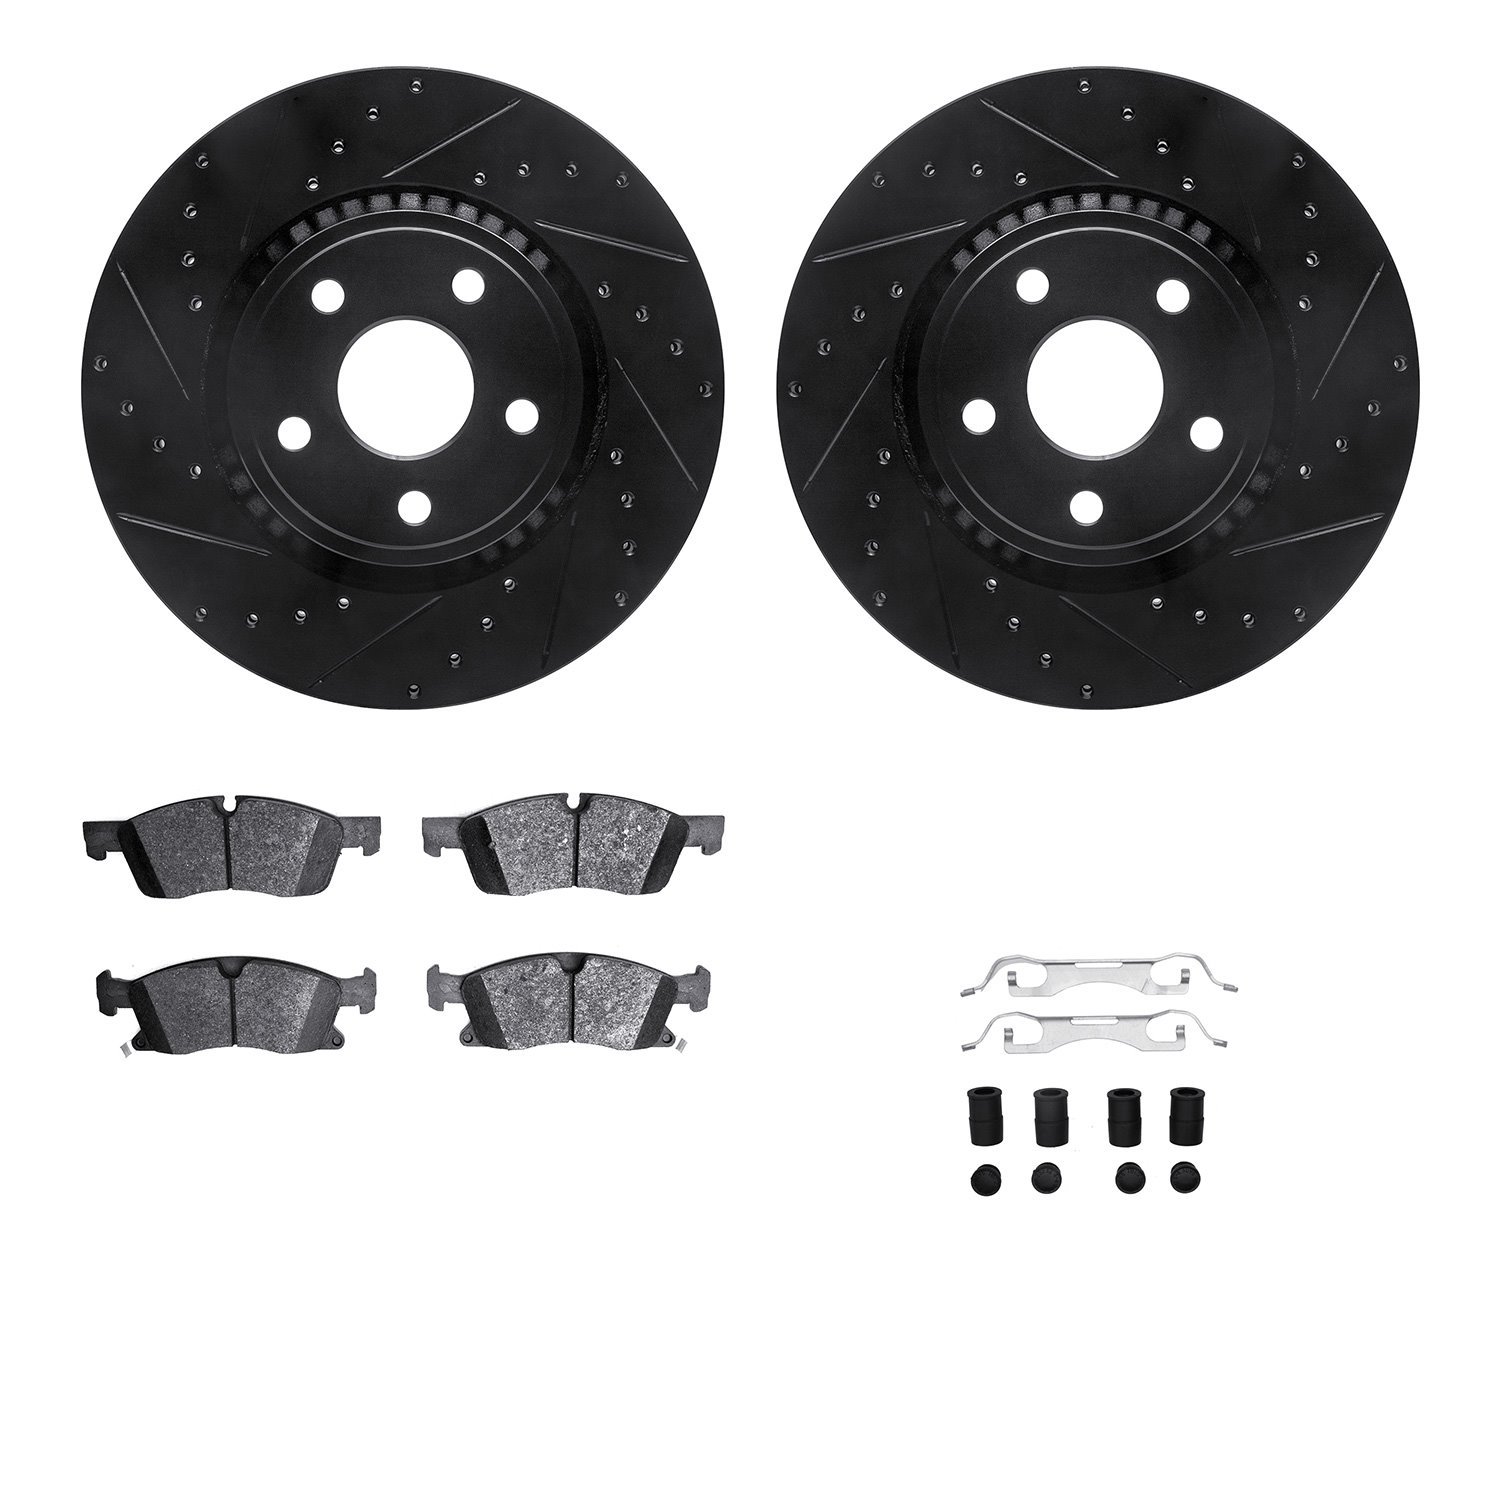 8412-42008 Drilled/Slotted Brake Rotors with Ultimate-Duty Brake Pads Kit & Hardware [Black], Fits Select Mopar, Position: Front